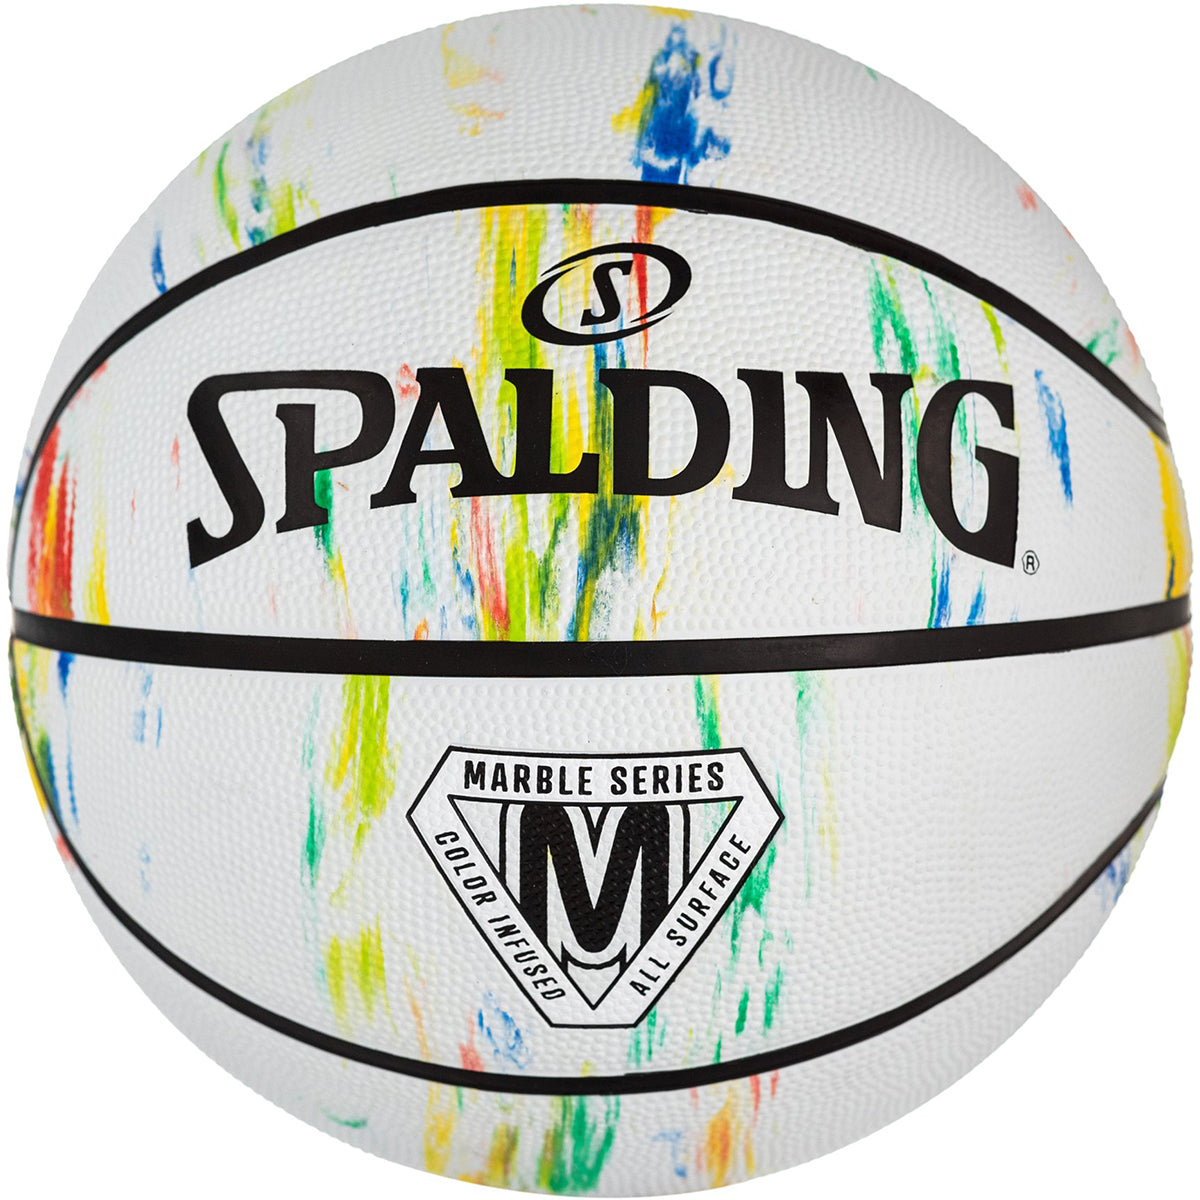 Spalding Marble Series Multicolor Outdoor Basketball Spalding